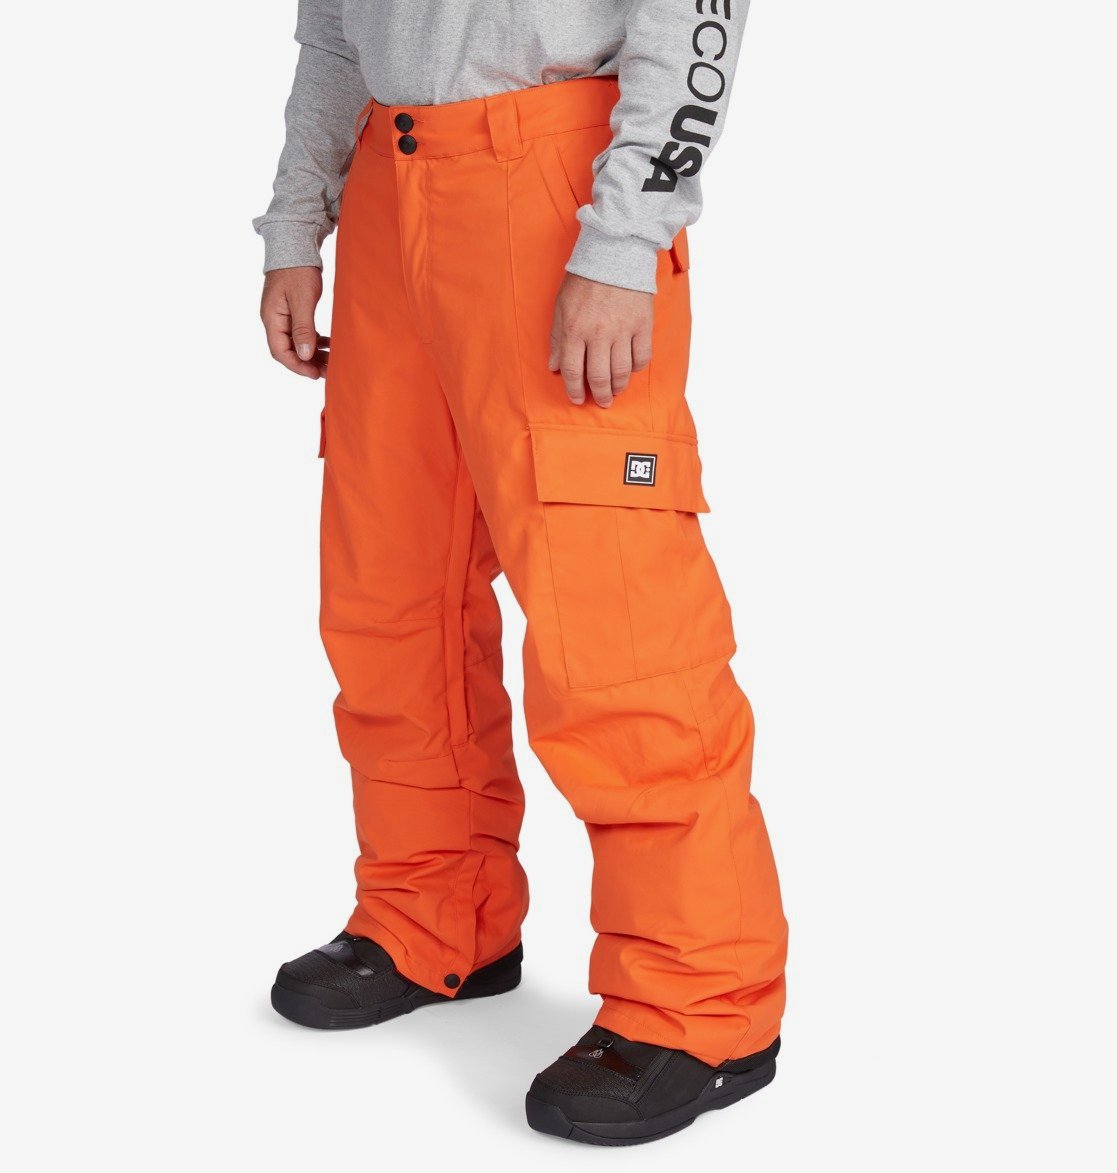 12 DC Banshee Kids Snowboard Pants Orangeade Sz M 